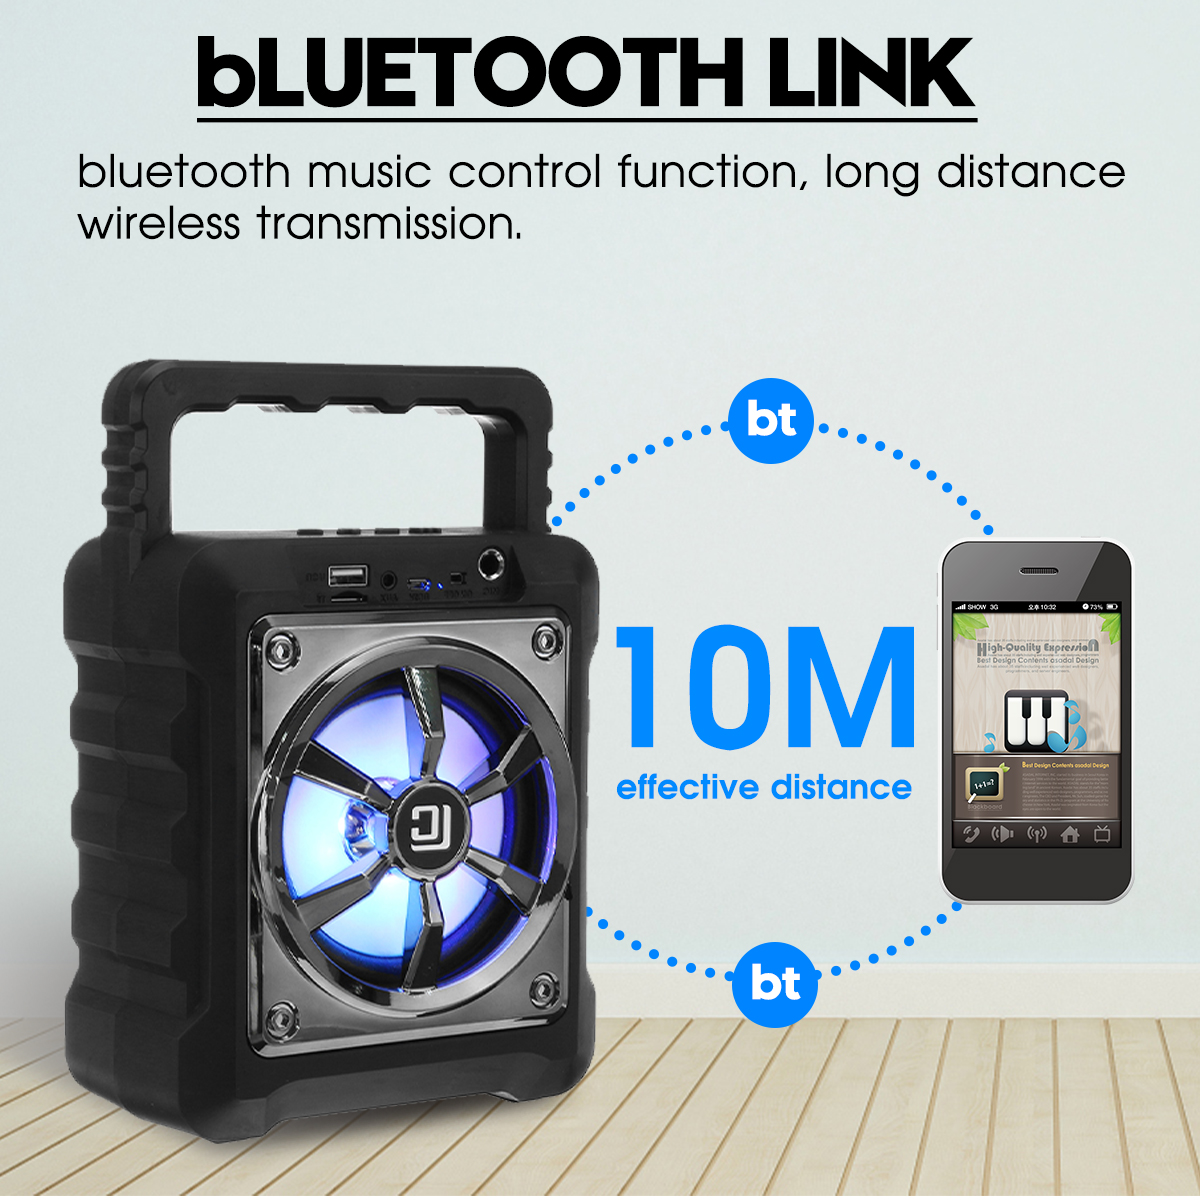 Bakeey-1200mAh-Portable-bluetooth-Hi-Fi-Speaker-Outdoors-Waterproof-AUX-USB-TF-FM-Playing-Loudspeake-1647995-2